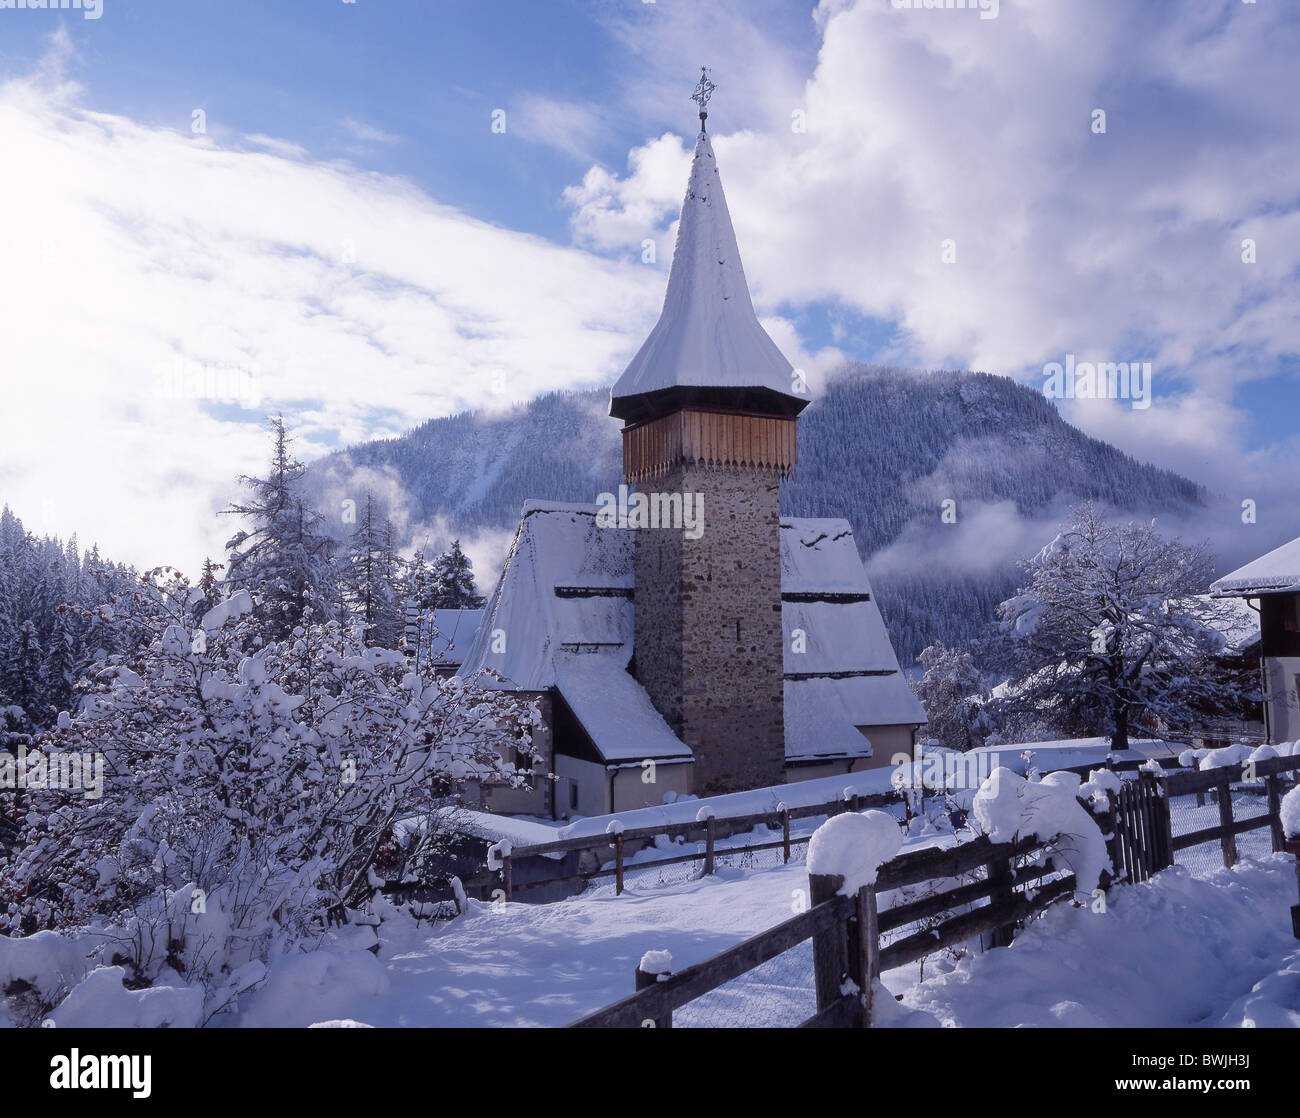 Prattigau Langwies villaggio chiesa snowbound coperto di neve fresca neve nevicata foresta legno valley mountains Foto Stock